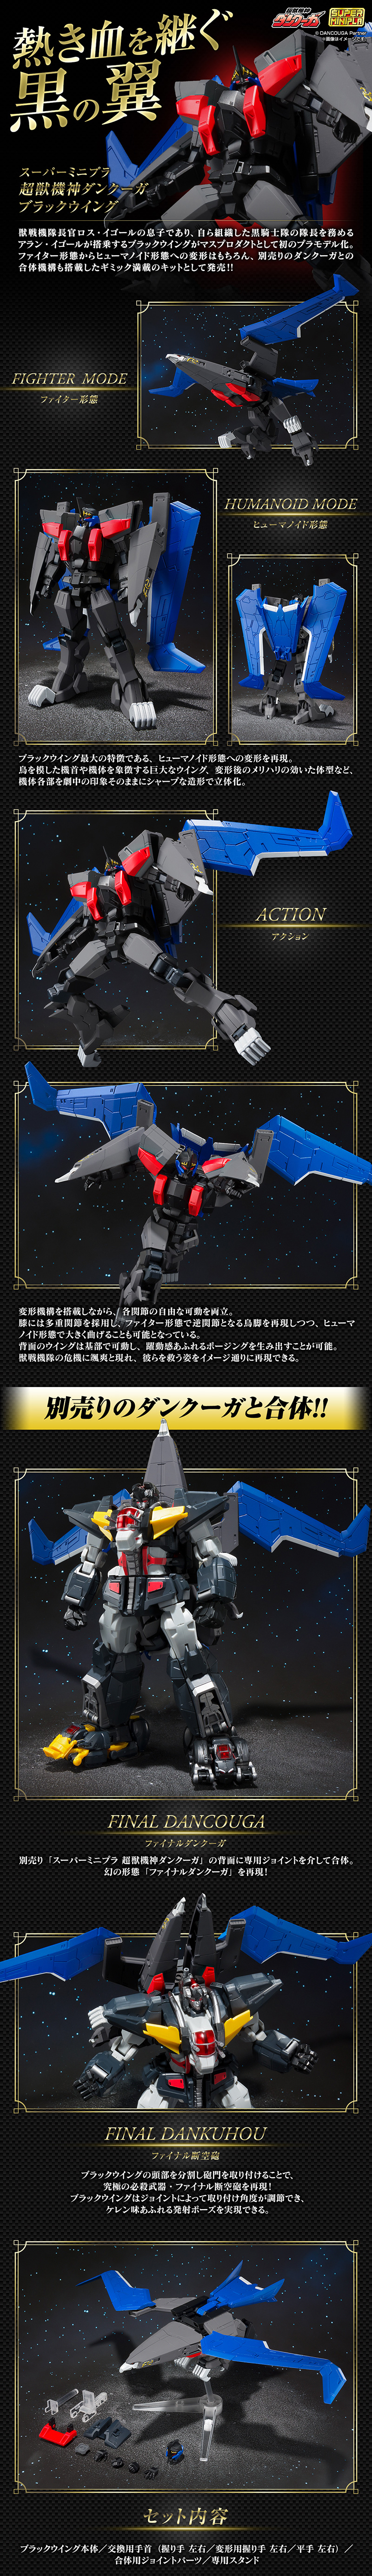 Super Minipla Super Beast Machine God Dancouga Black Wing 年10月發送 Premium Bandai 官方